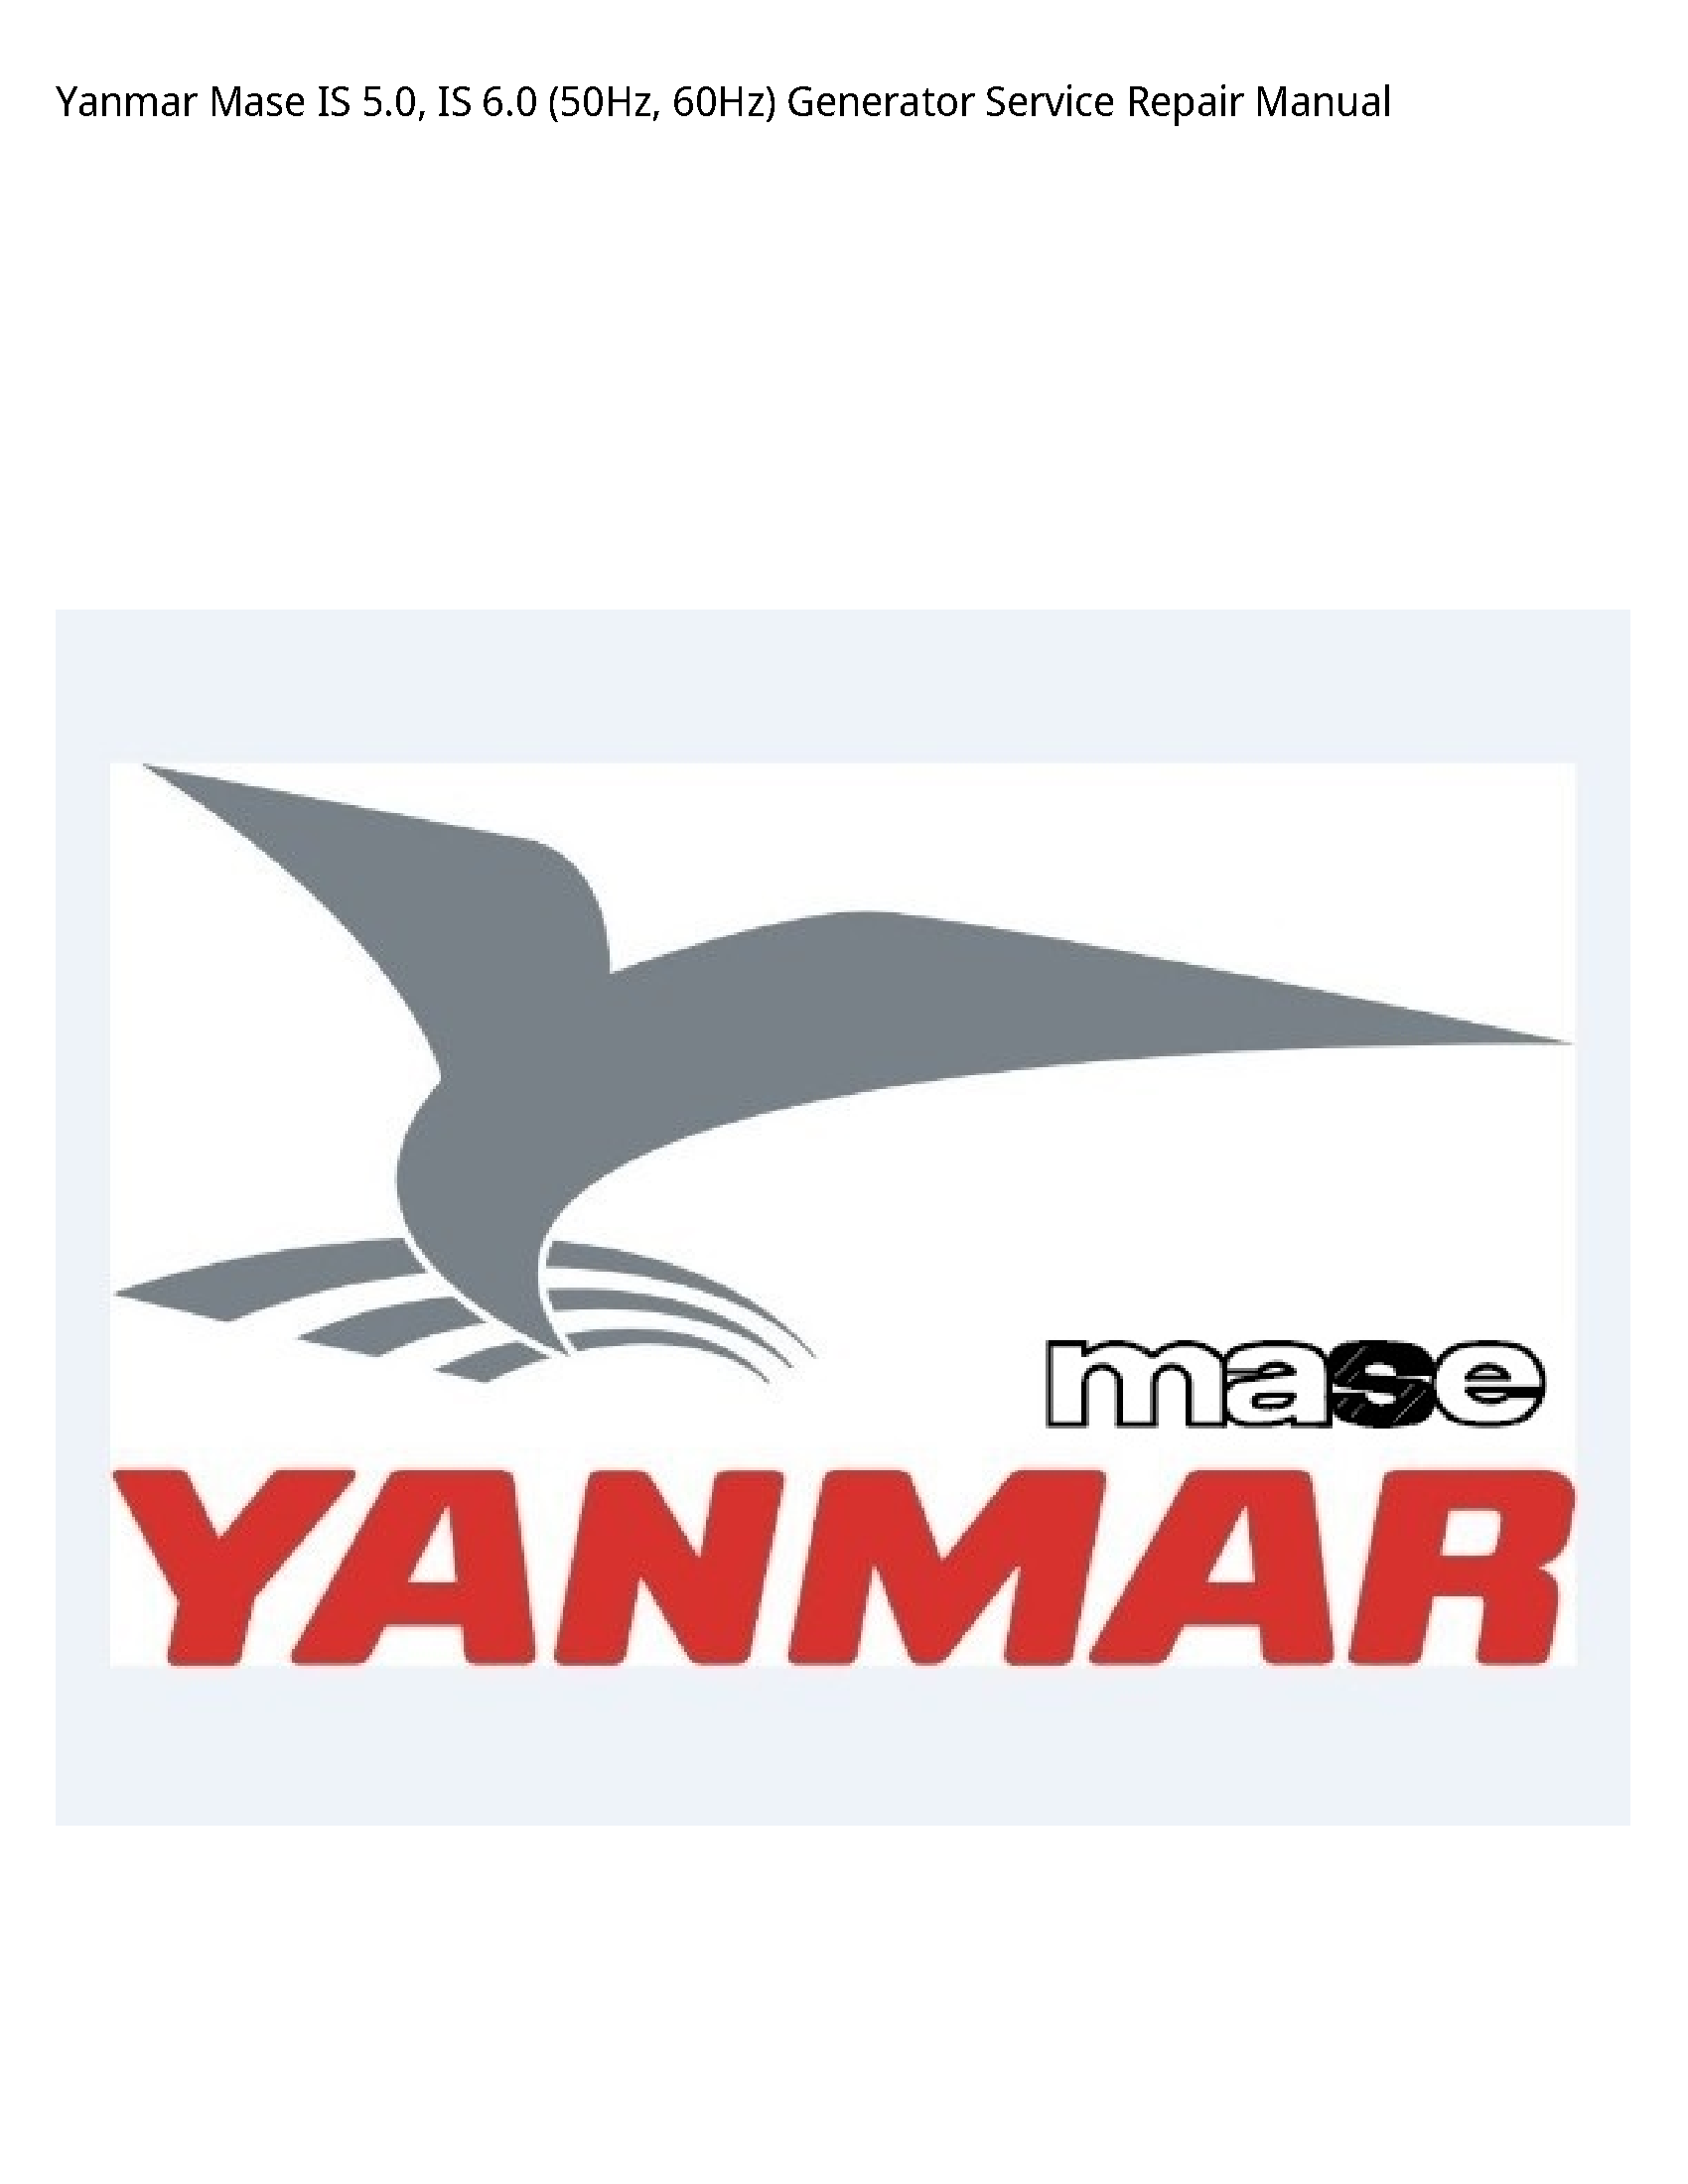 Yanmar 5.0 Mase IS IS Generator manual